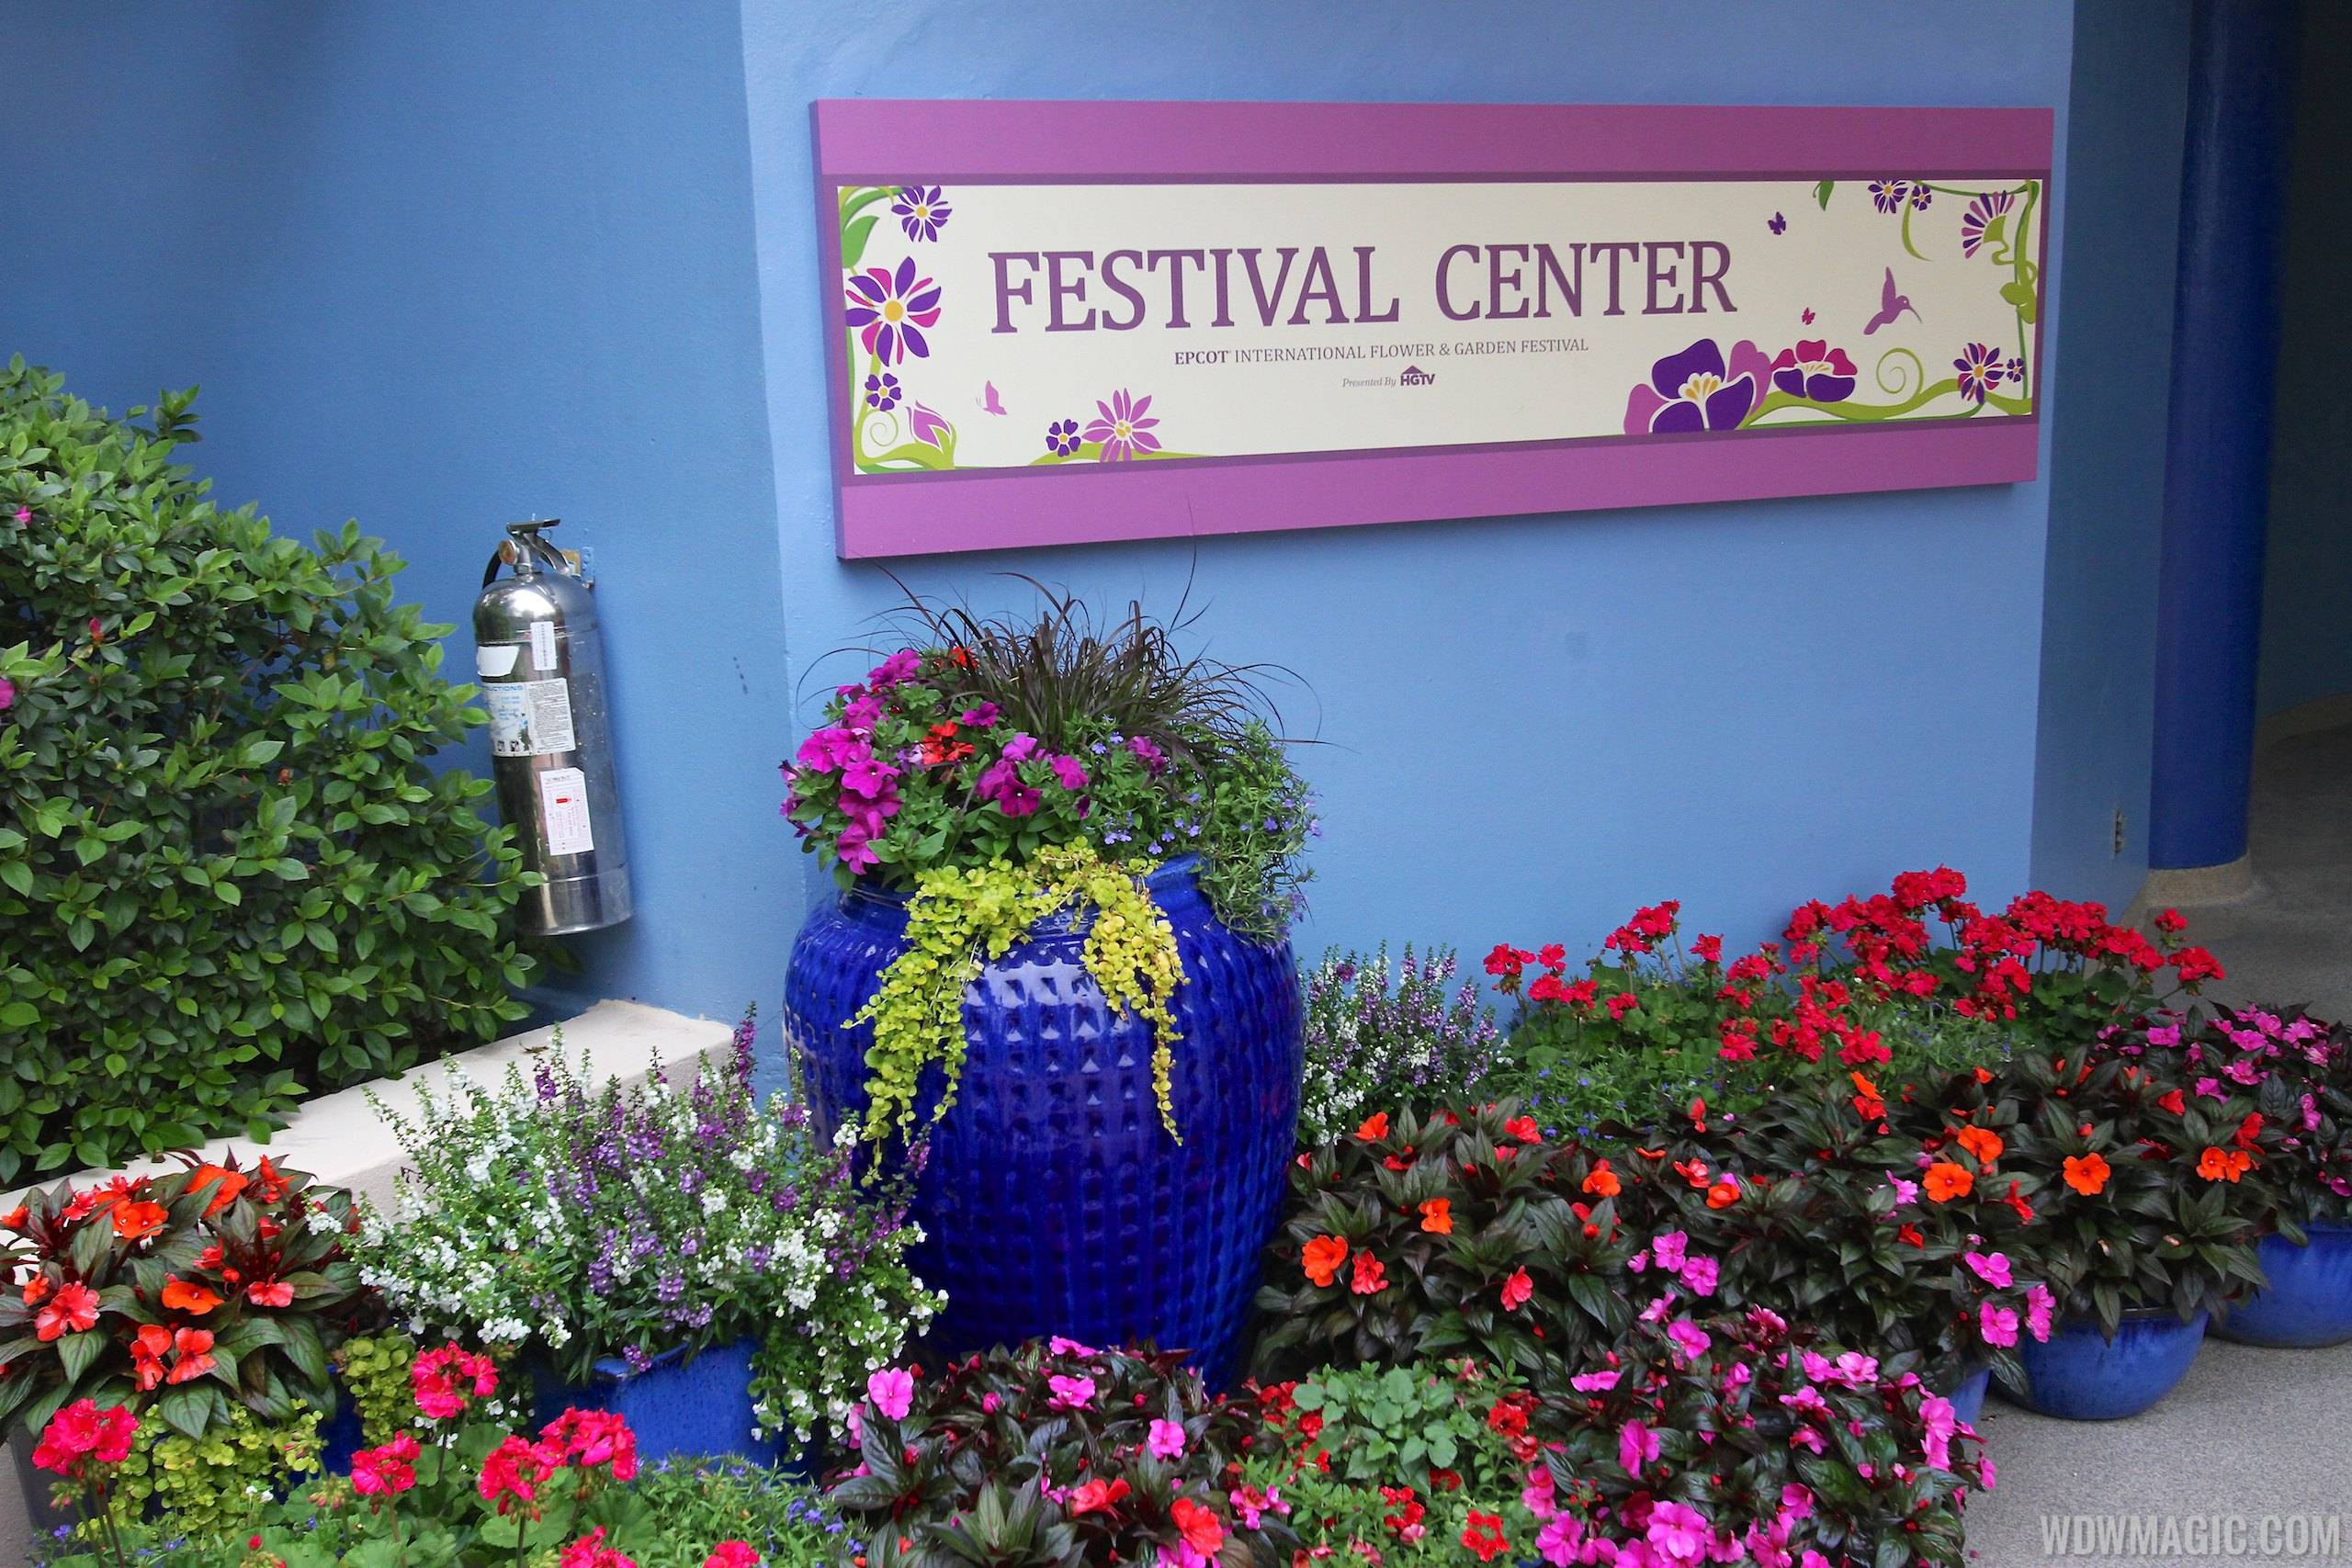 2014 Epcot Flower and Garden Festival - Festival Center signage